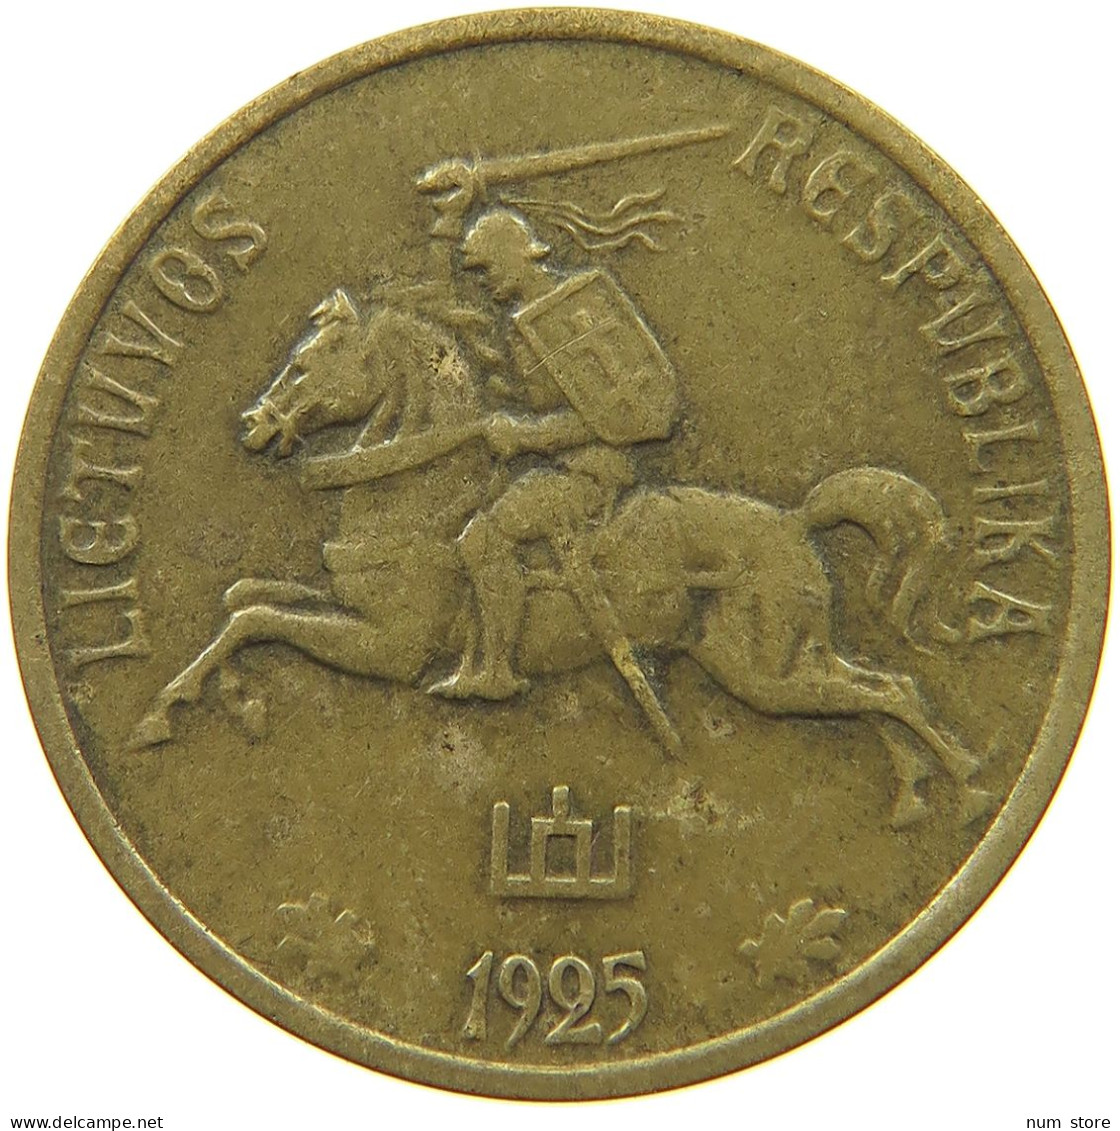 LITHUANIA 10 CENTU 1925  #a033 0951 - Lituanie